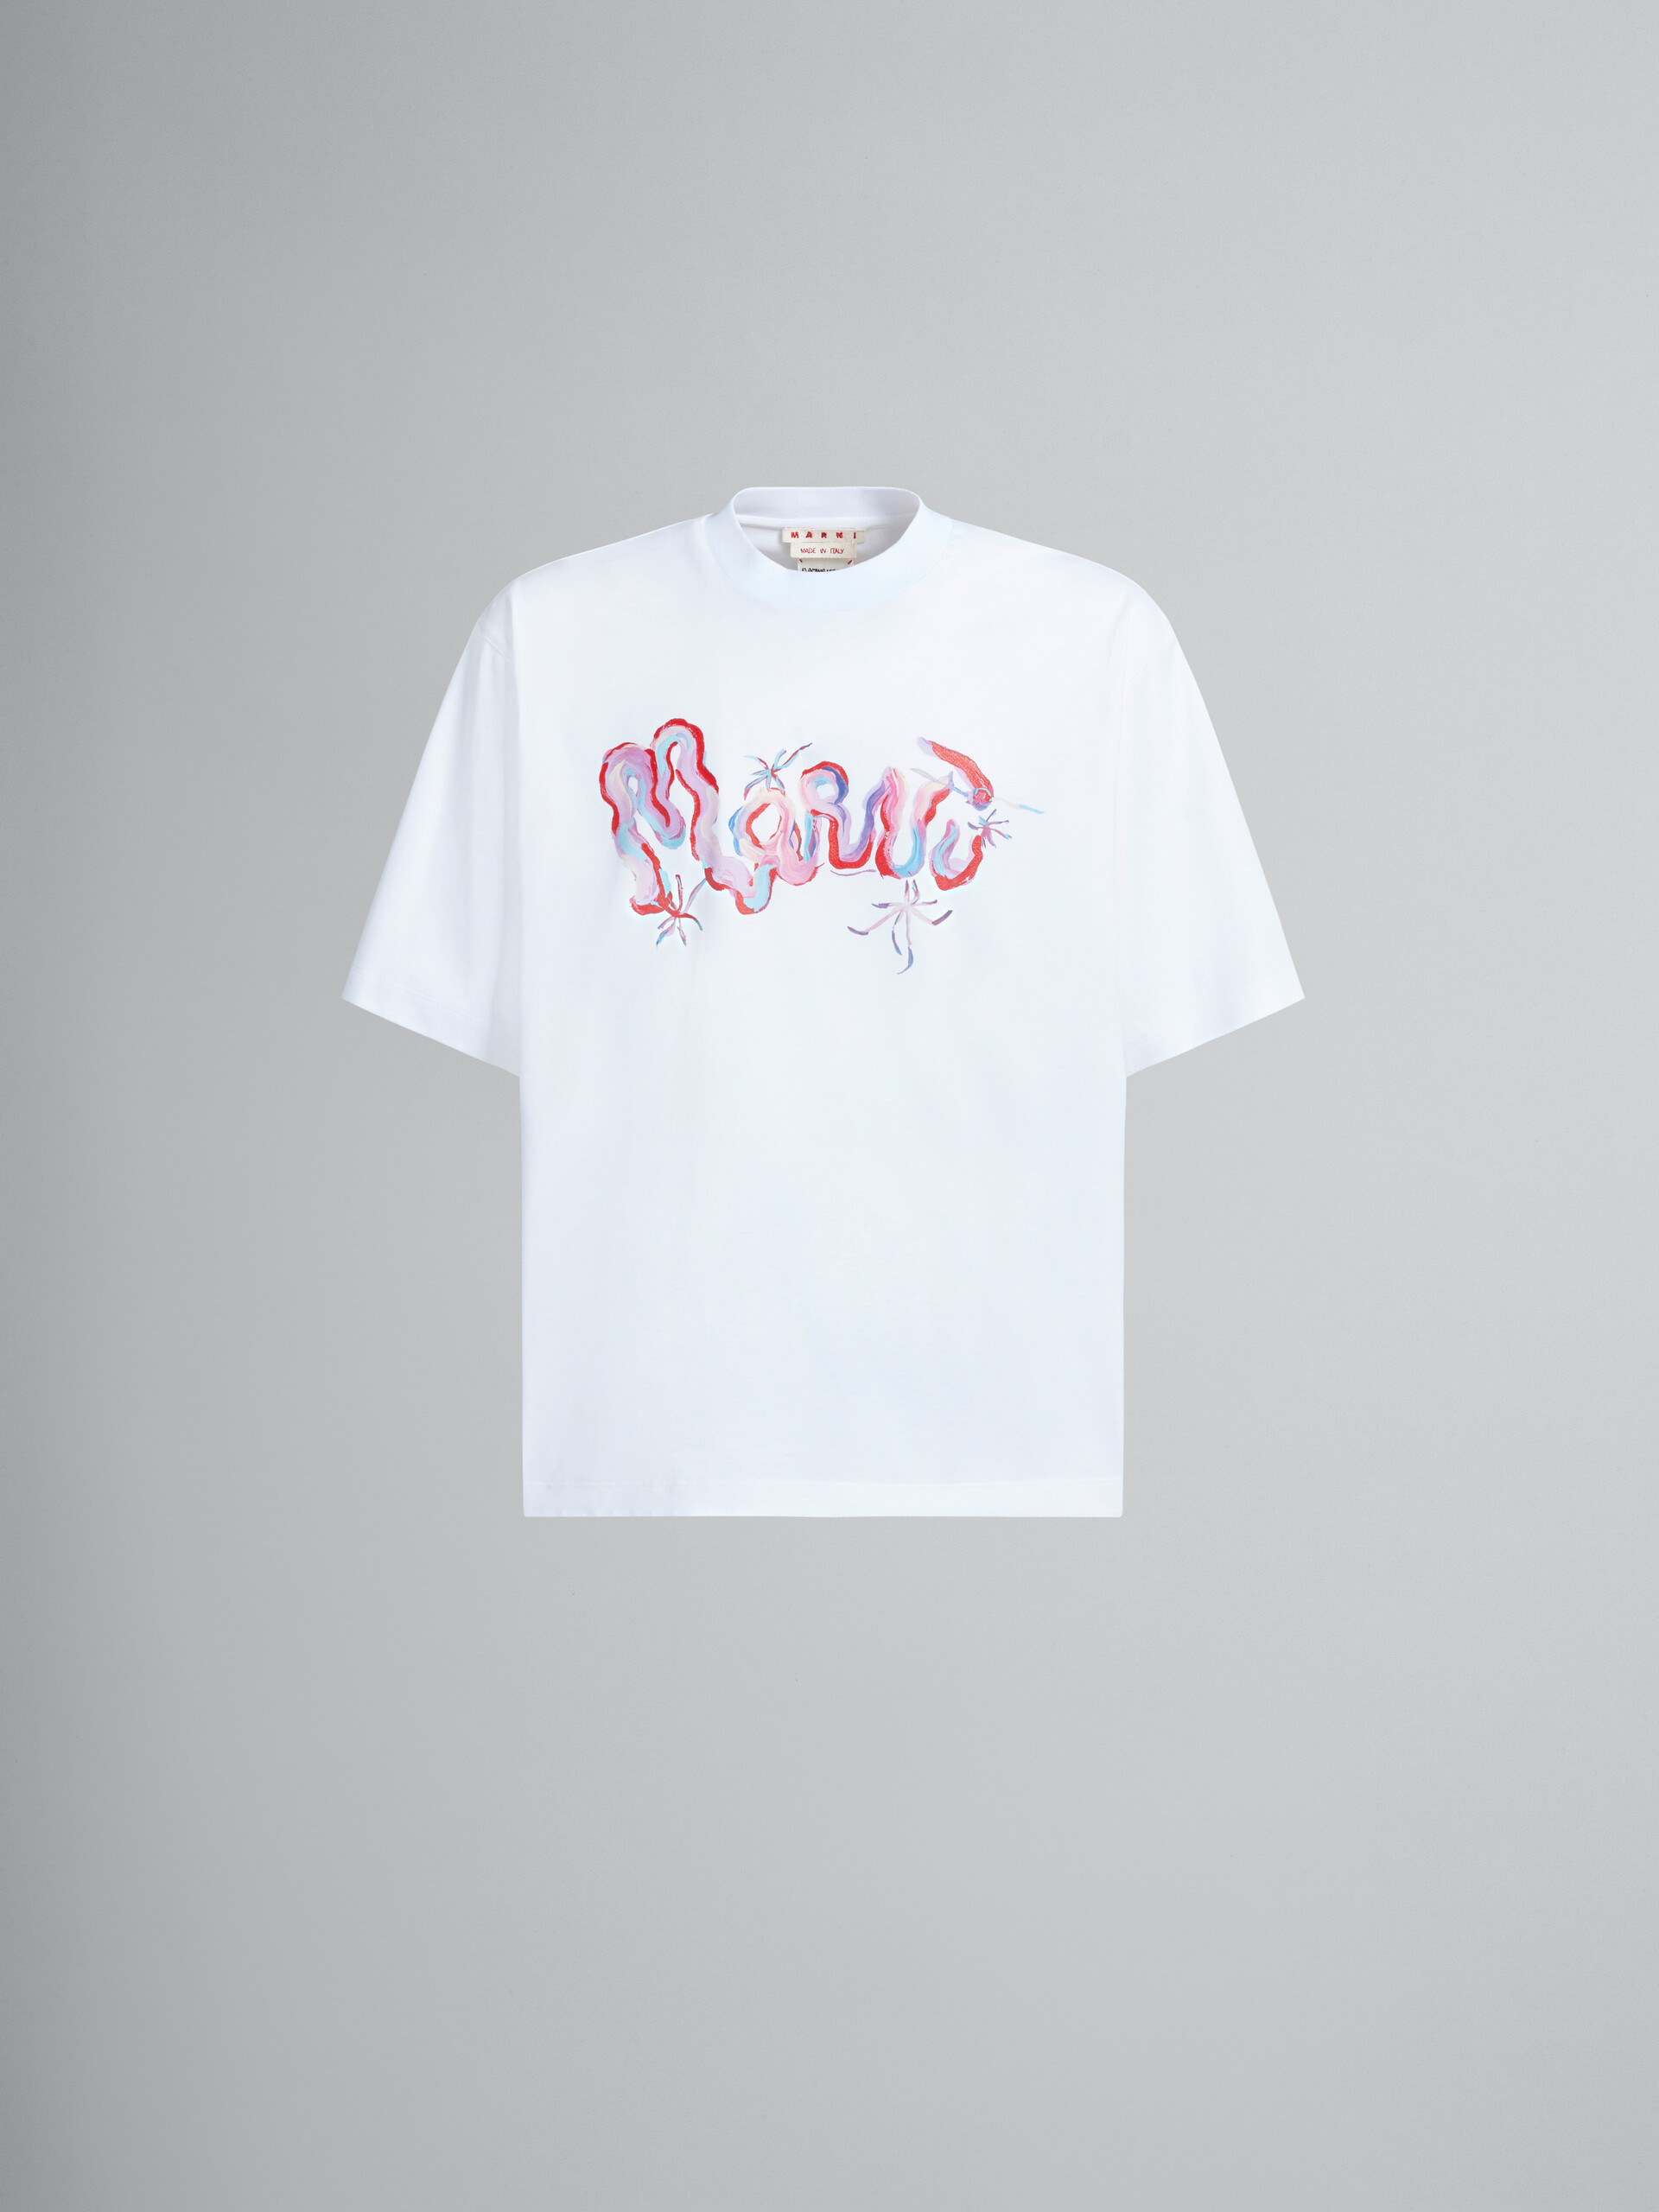 White cotton T-shirt with Marni Whirl print - T-shirts - Image 1